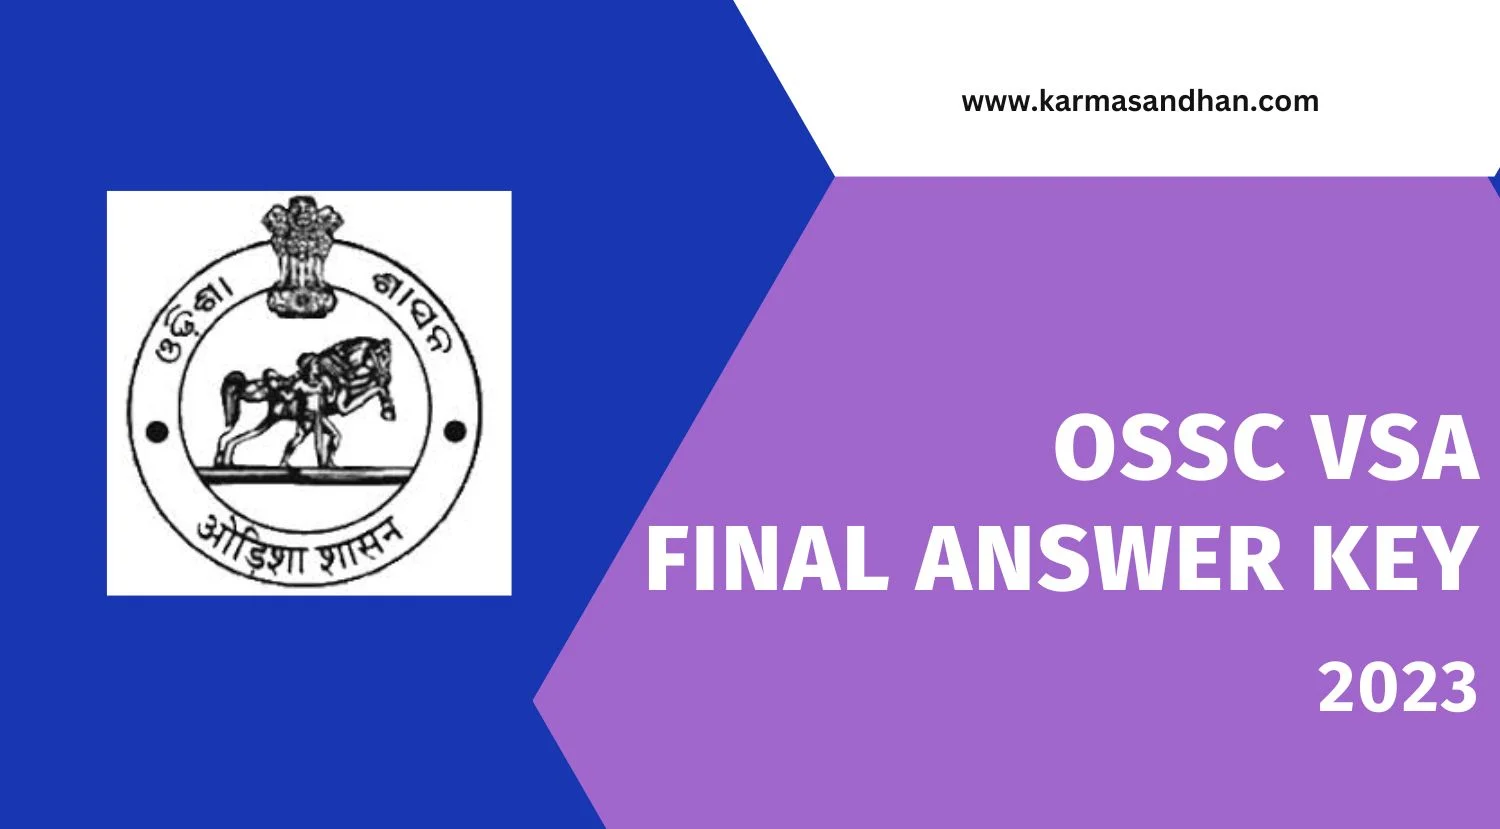 OSSC VSA Final Answer Key 2023